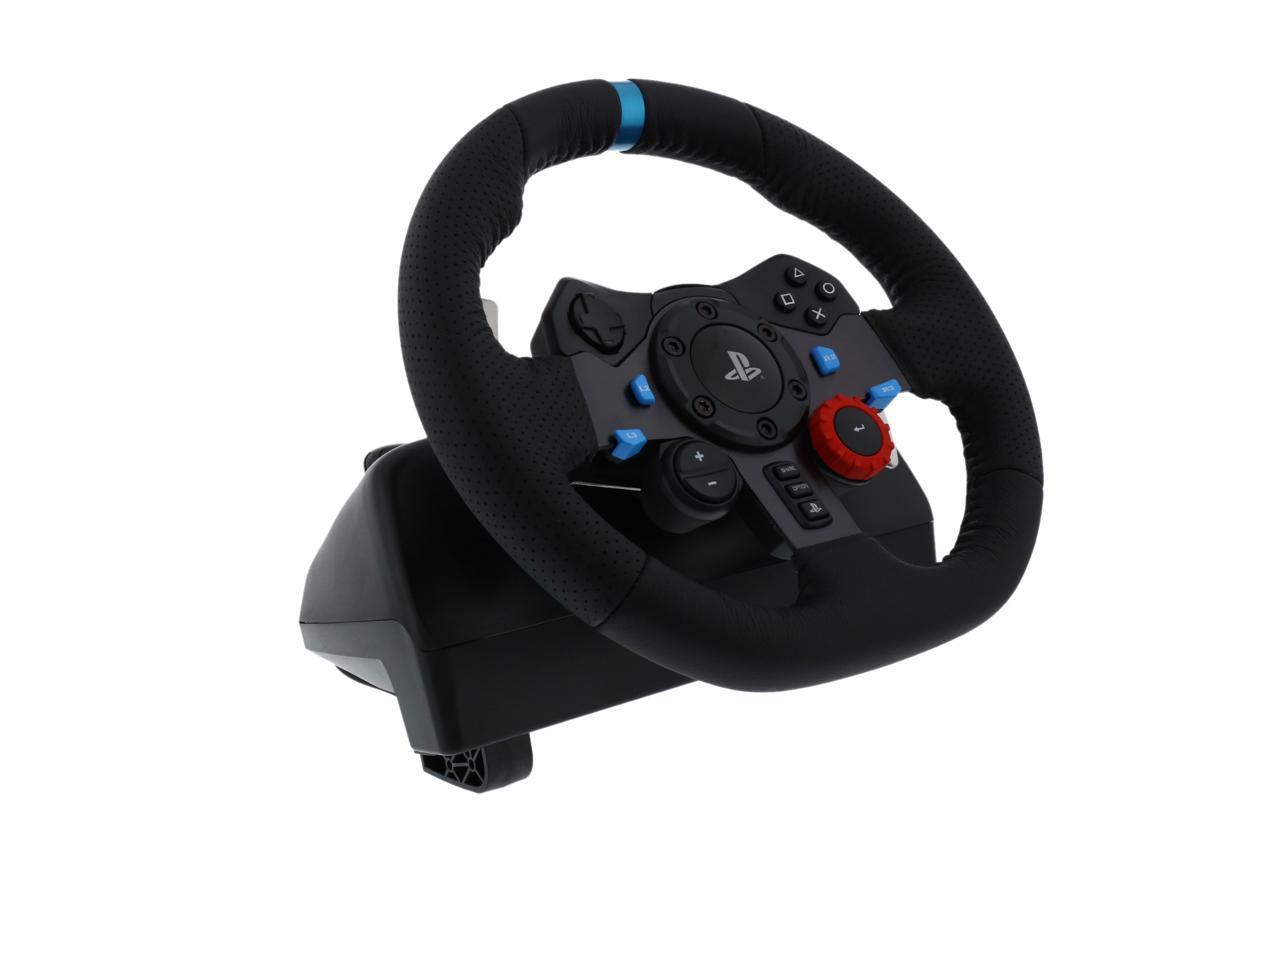 tilgive Ekstrem Partina City Logitech G29 Driving Force Racing Wheel for PS4, PS3, PC - Newegg.com